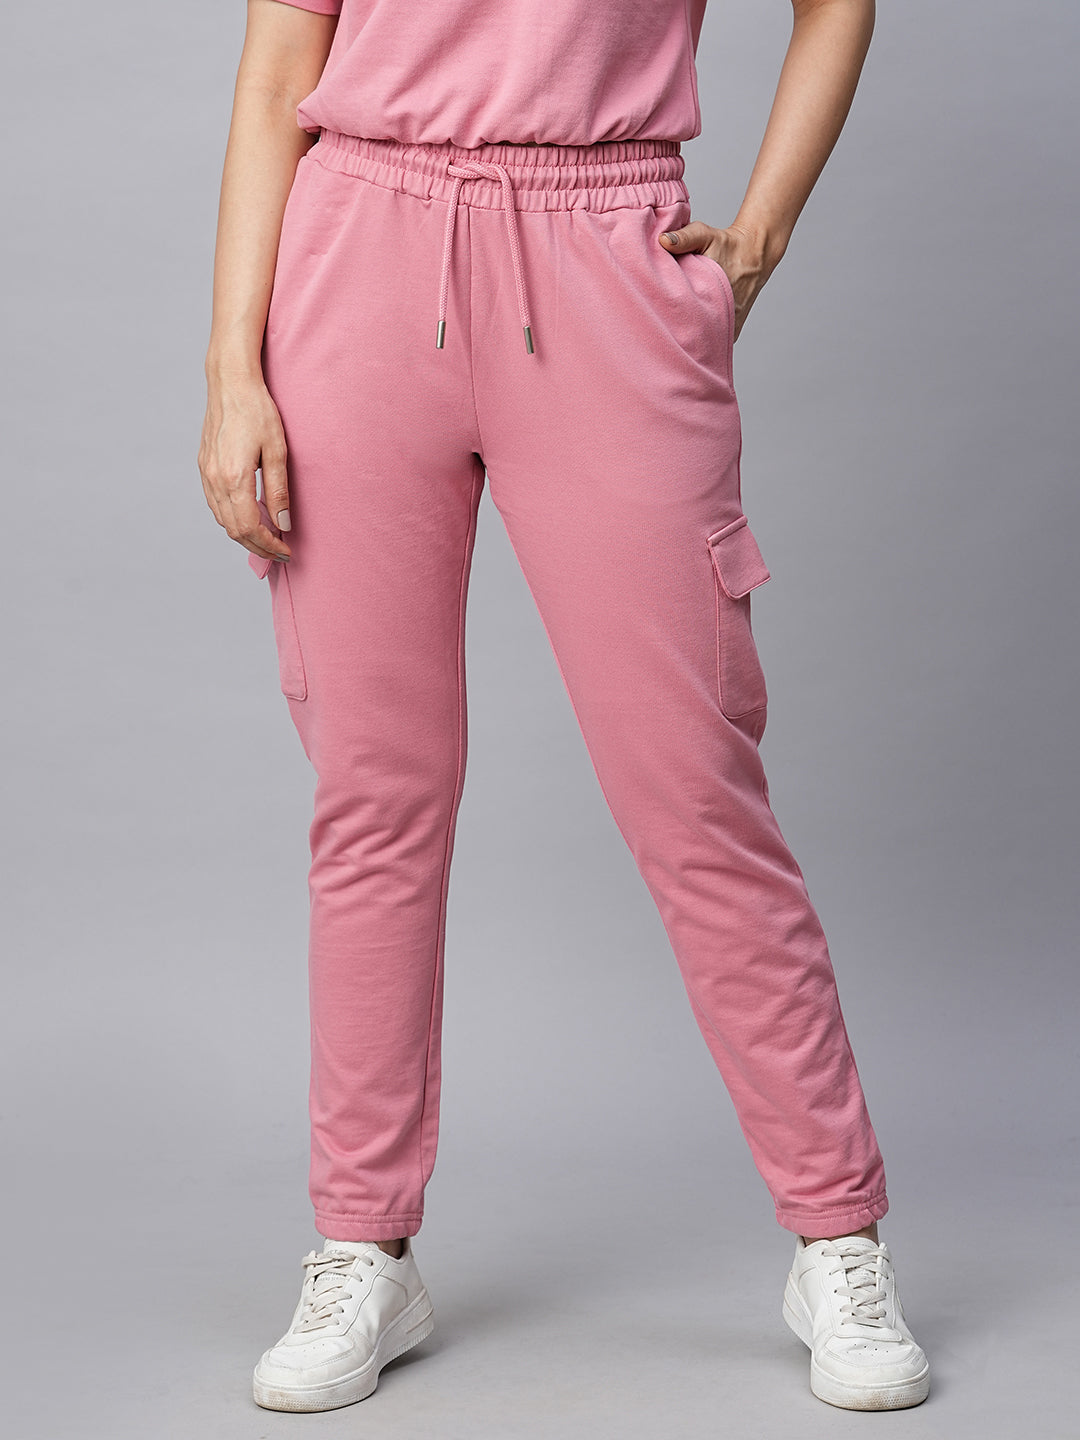 Women's Pink Cotton Regular Fit Kpant